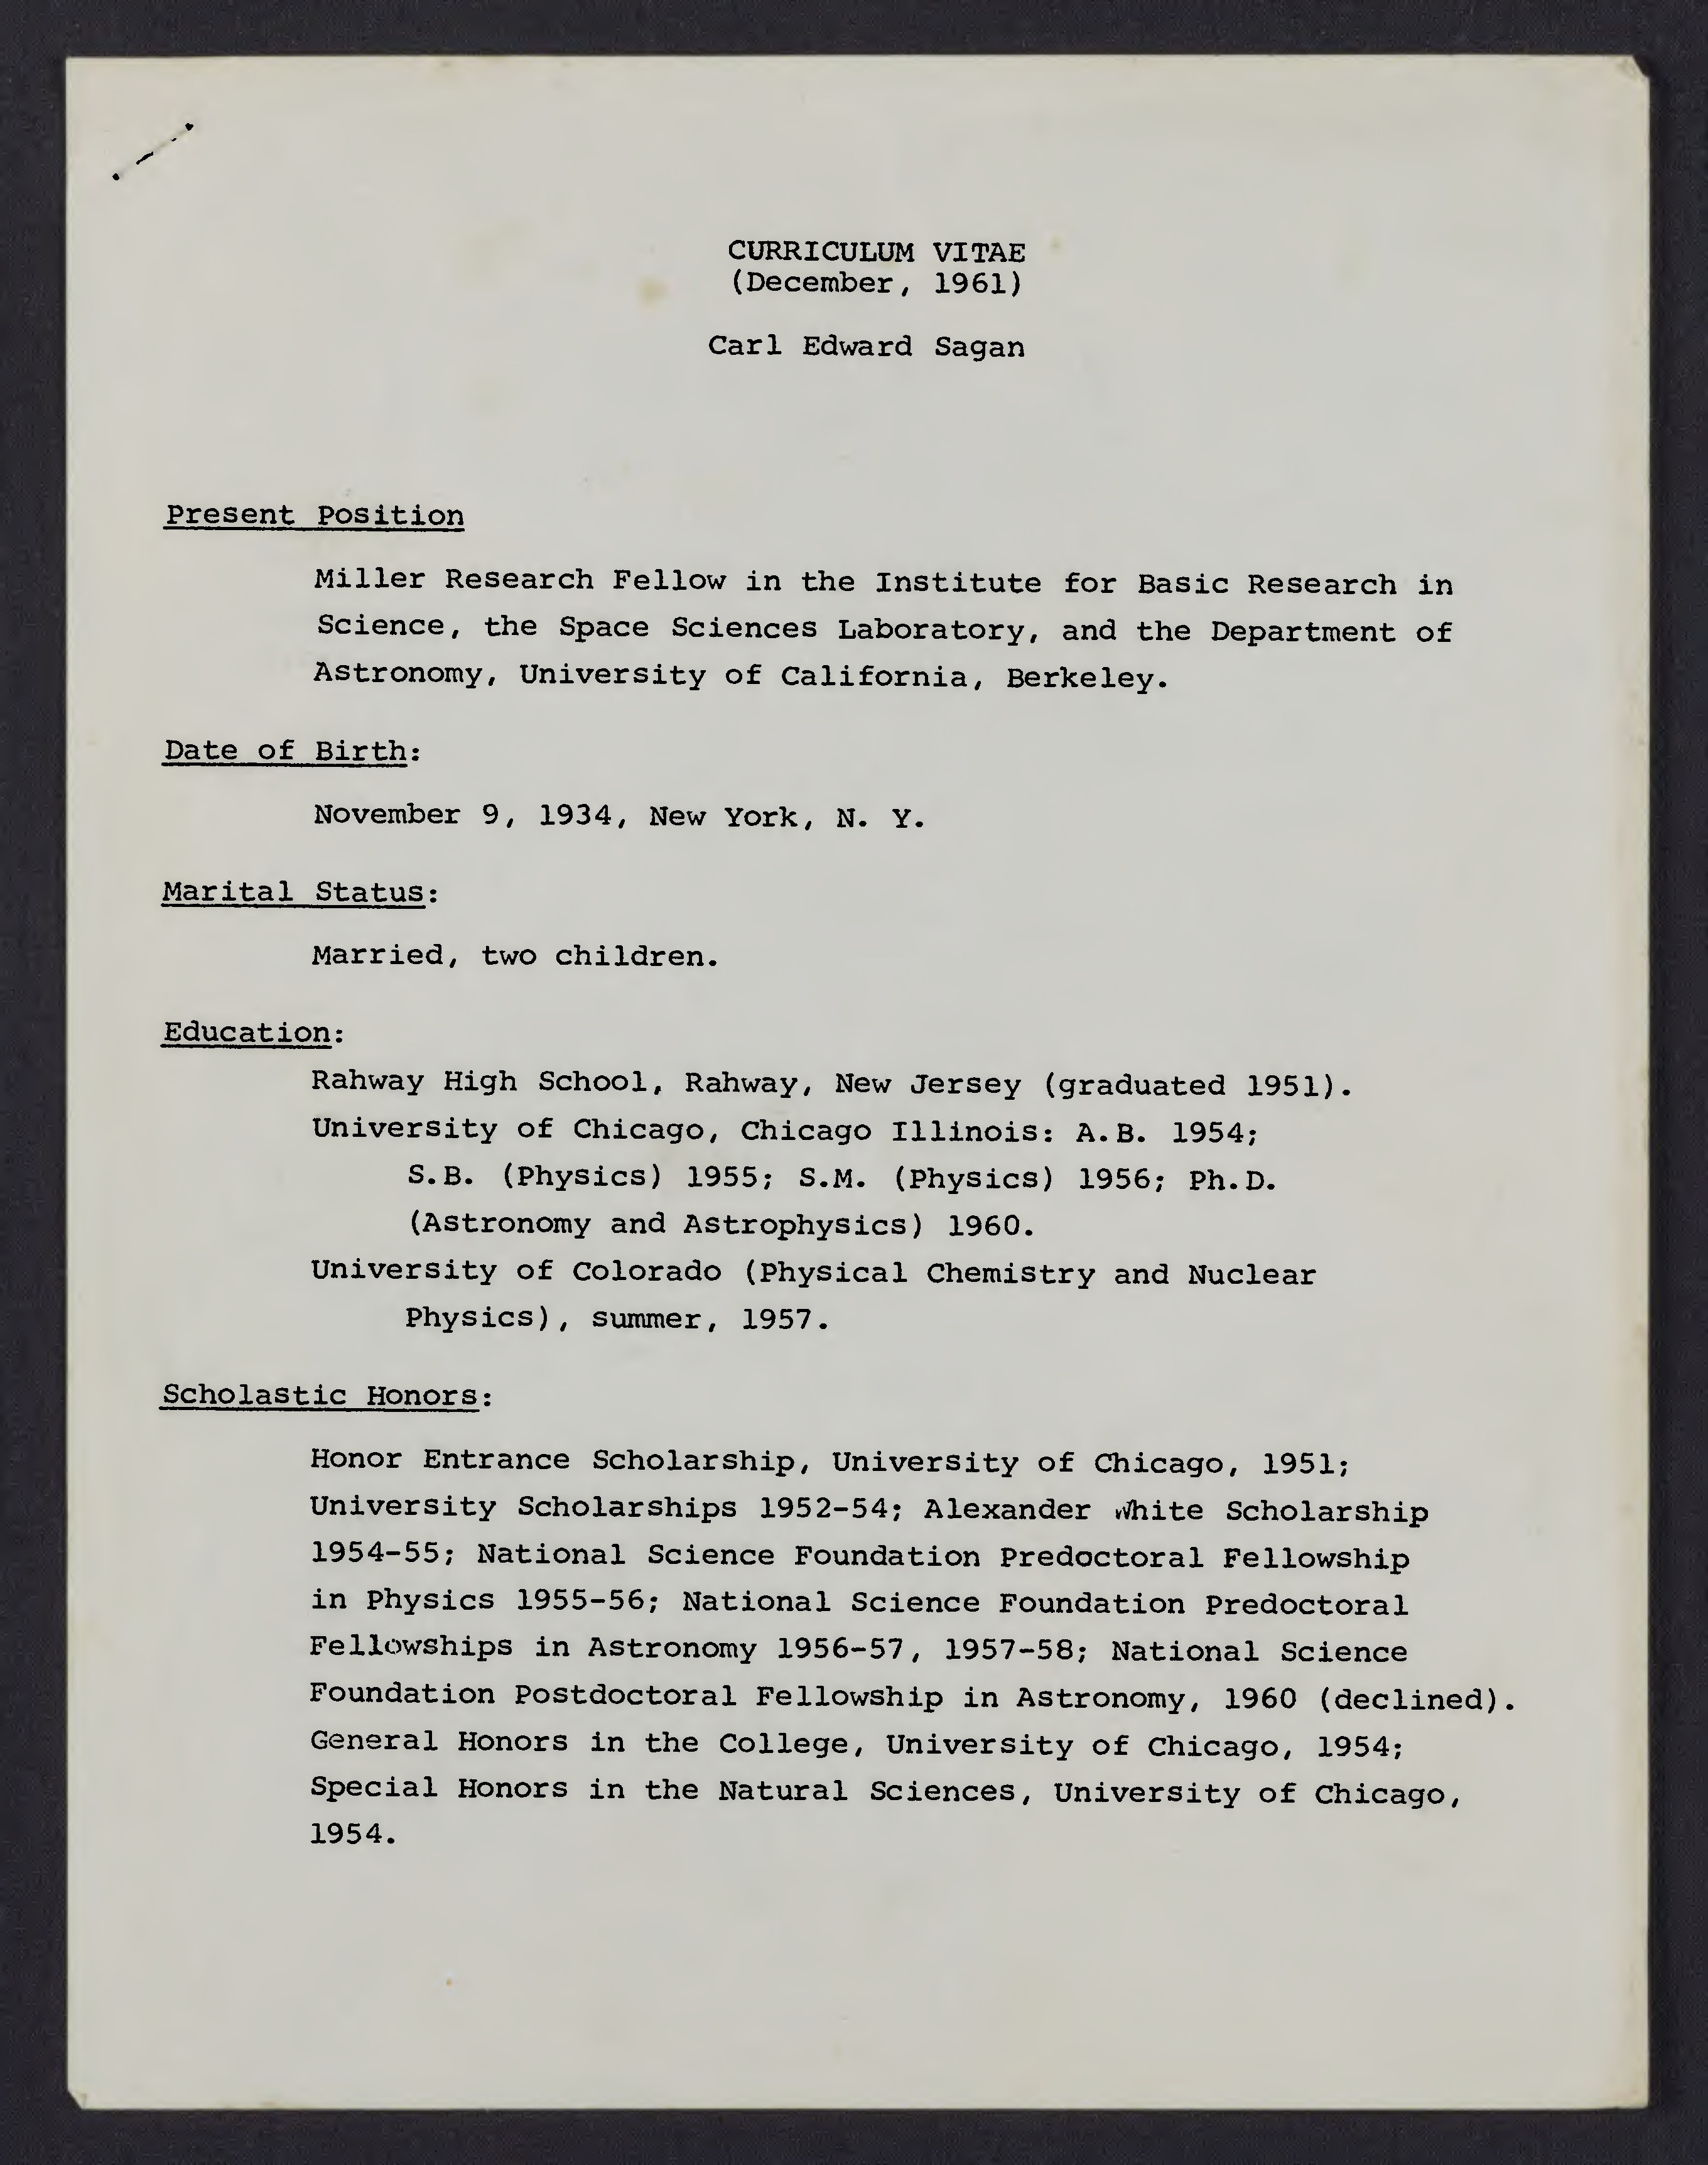 carl sagan CV resume 1961